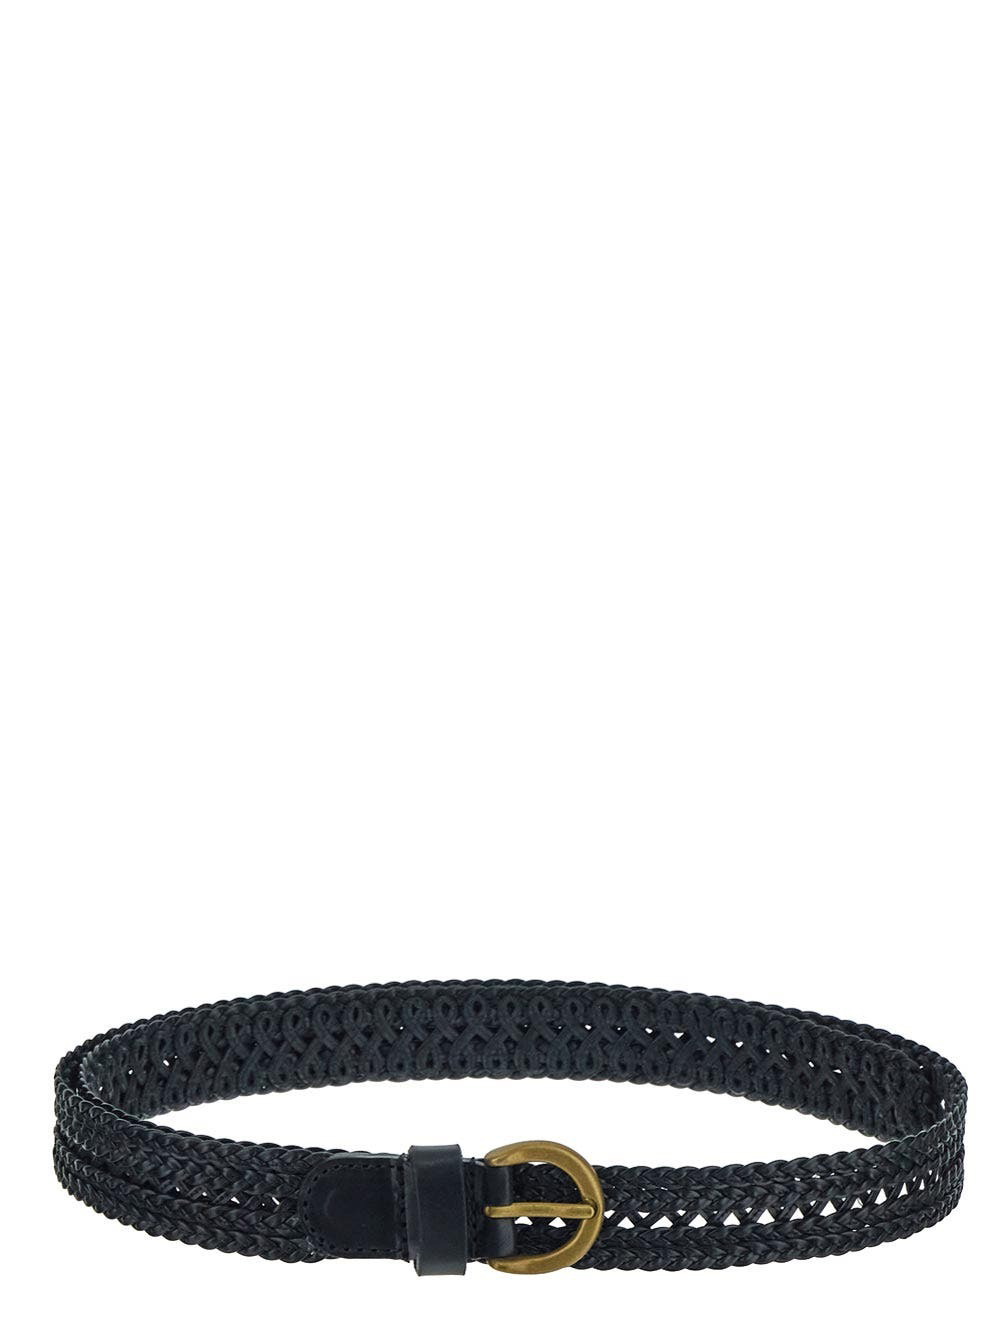 ETRO paisley-print pegasus-buckle belt - Brown